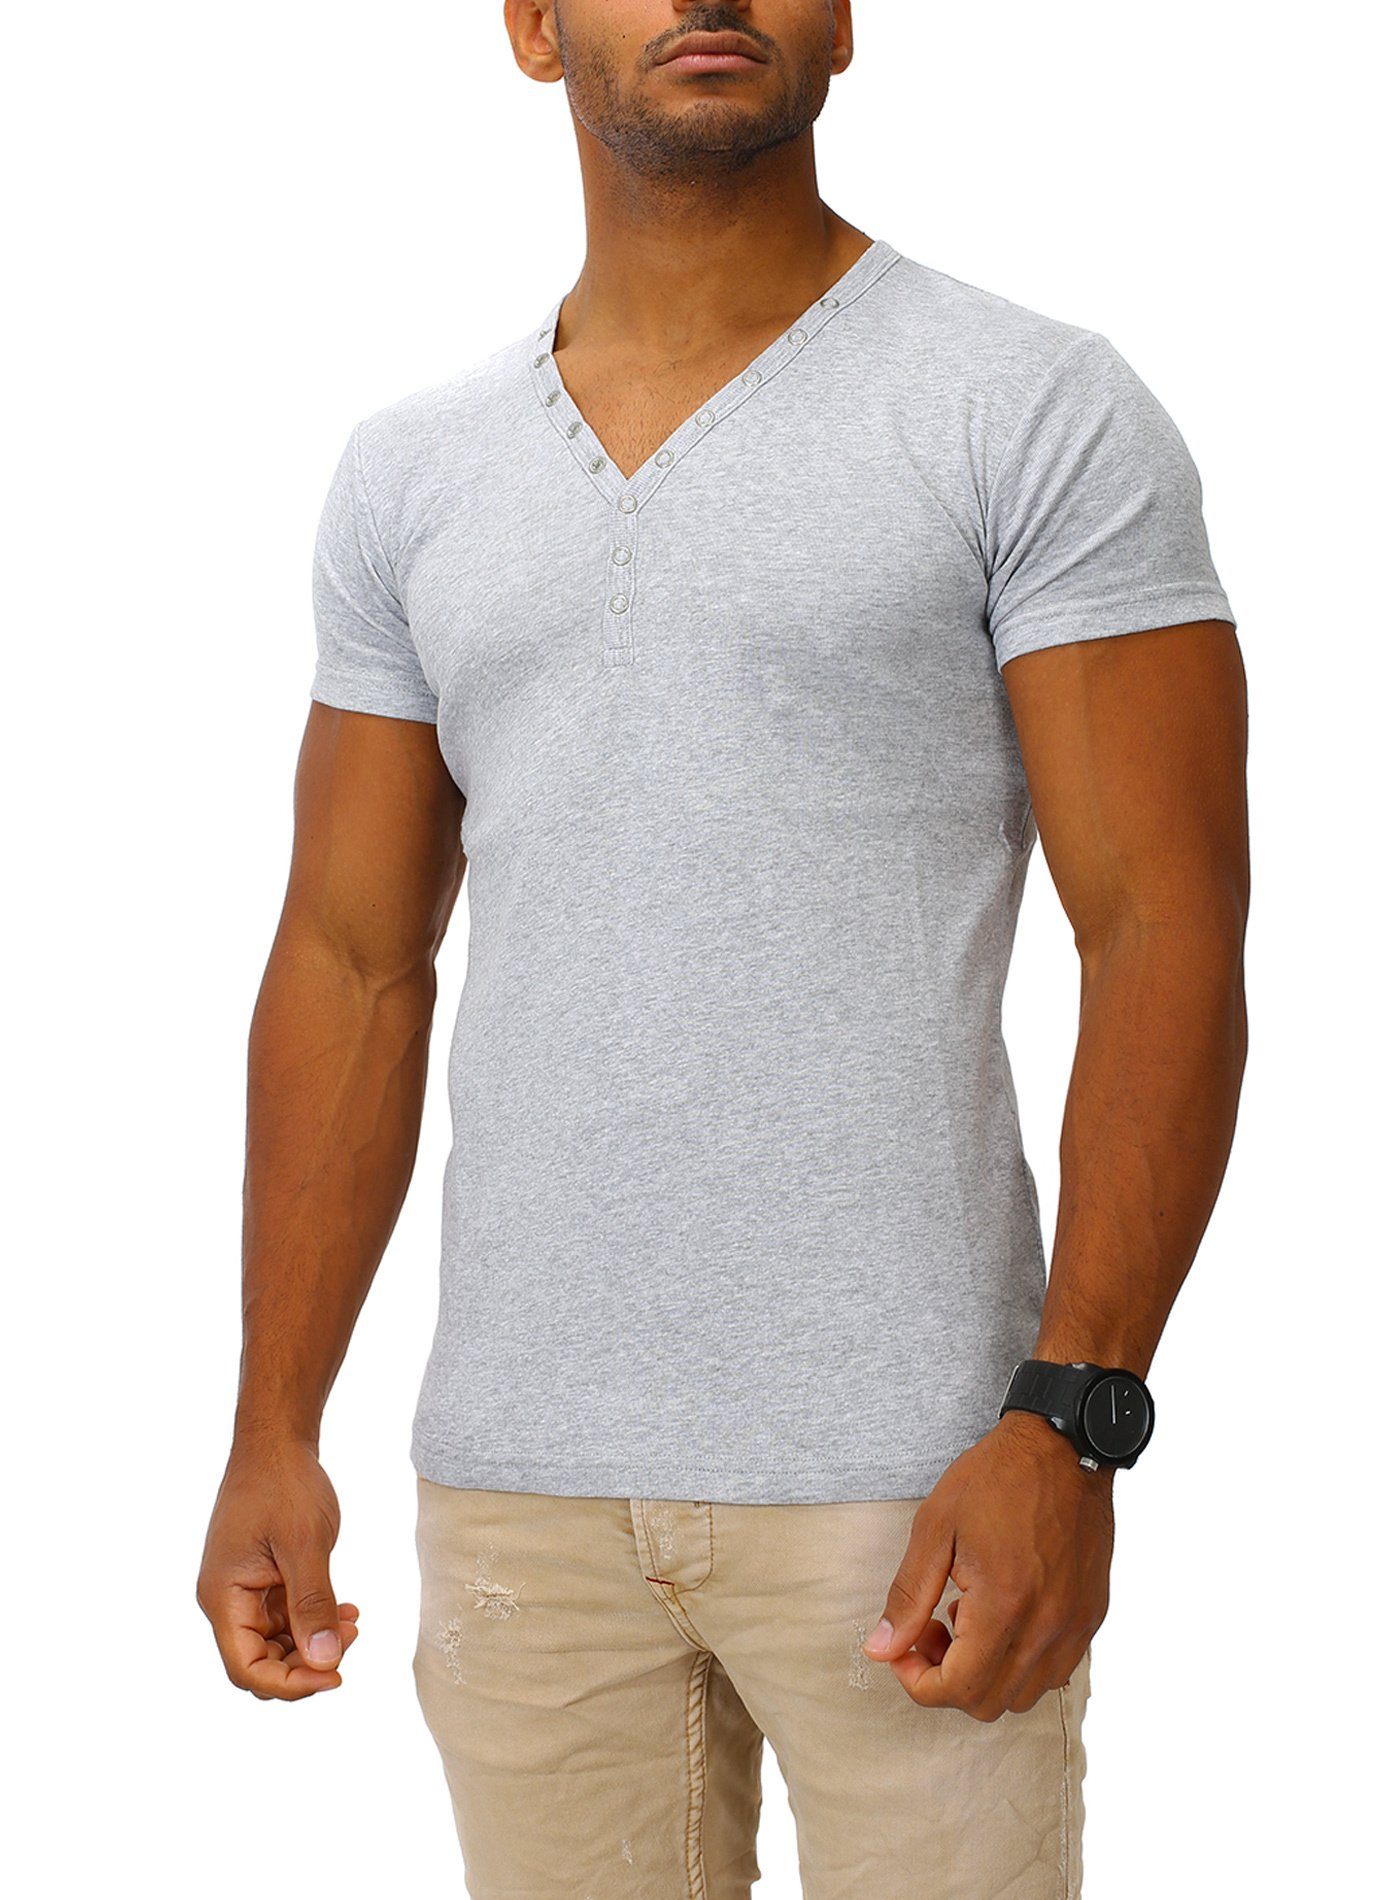 Joe Franks T-Shirt SMALL BUTTON in stylischem Slim Fit, Kurzarm Druckknopf grey melange